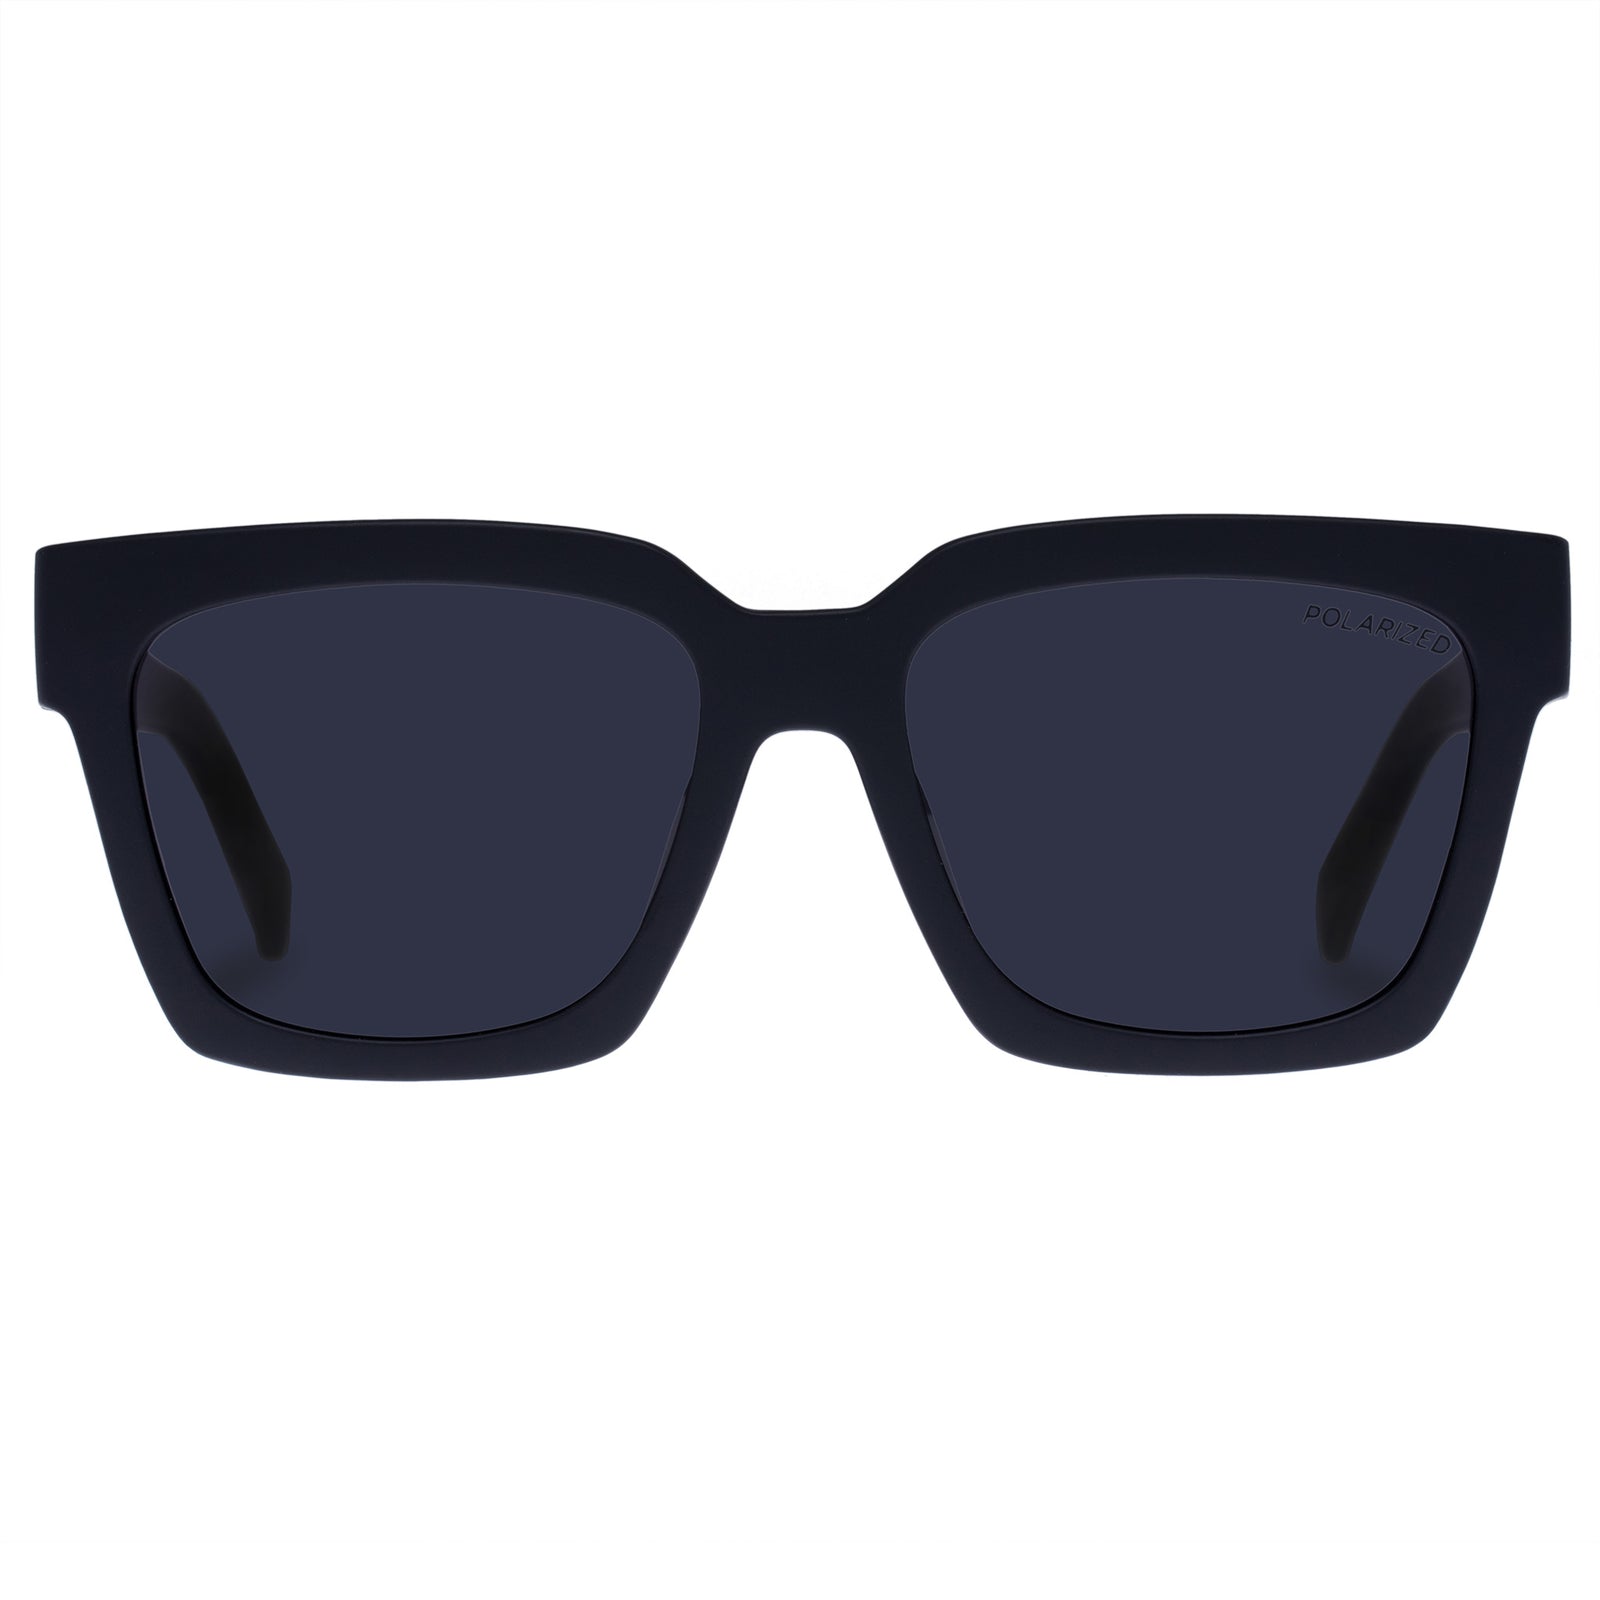 Cheap Black Square Sunglasses, low price, GLASSES, good quality